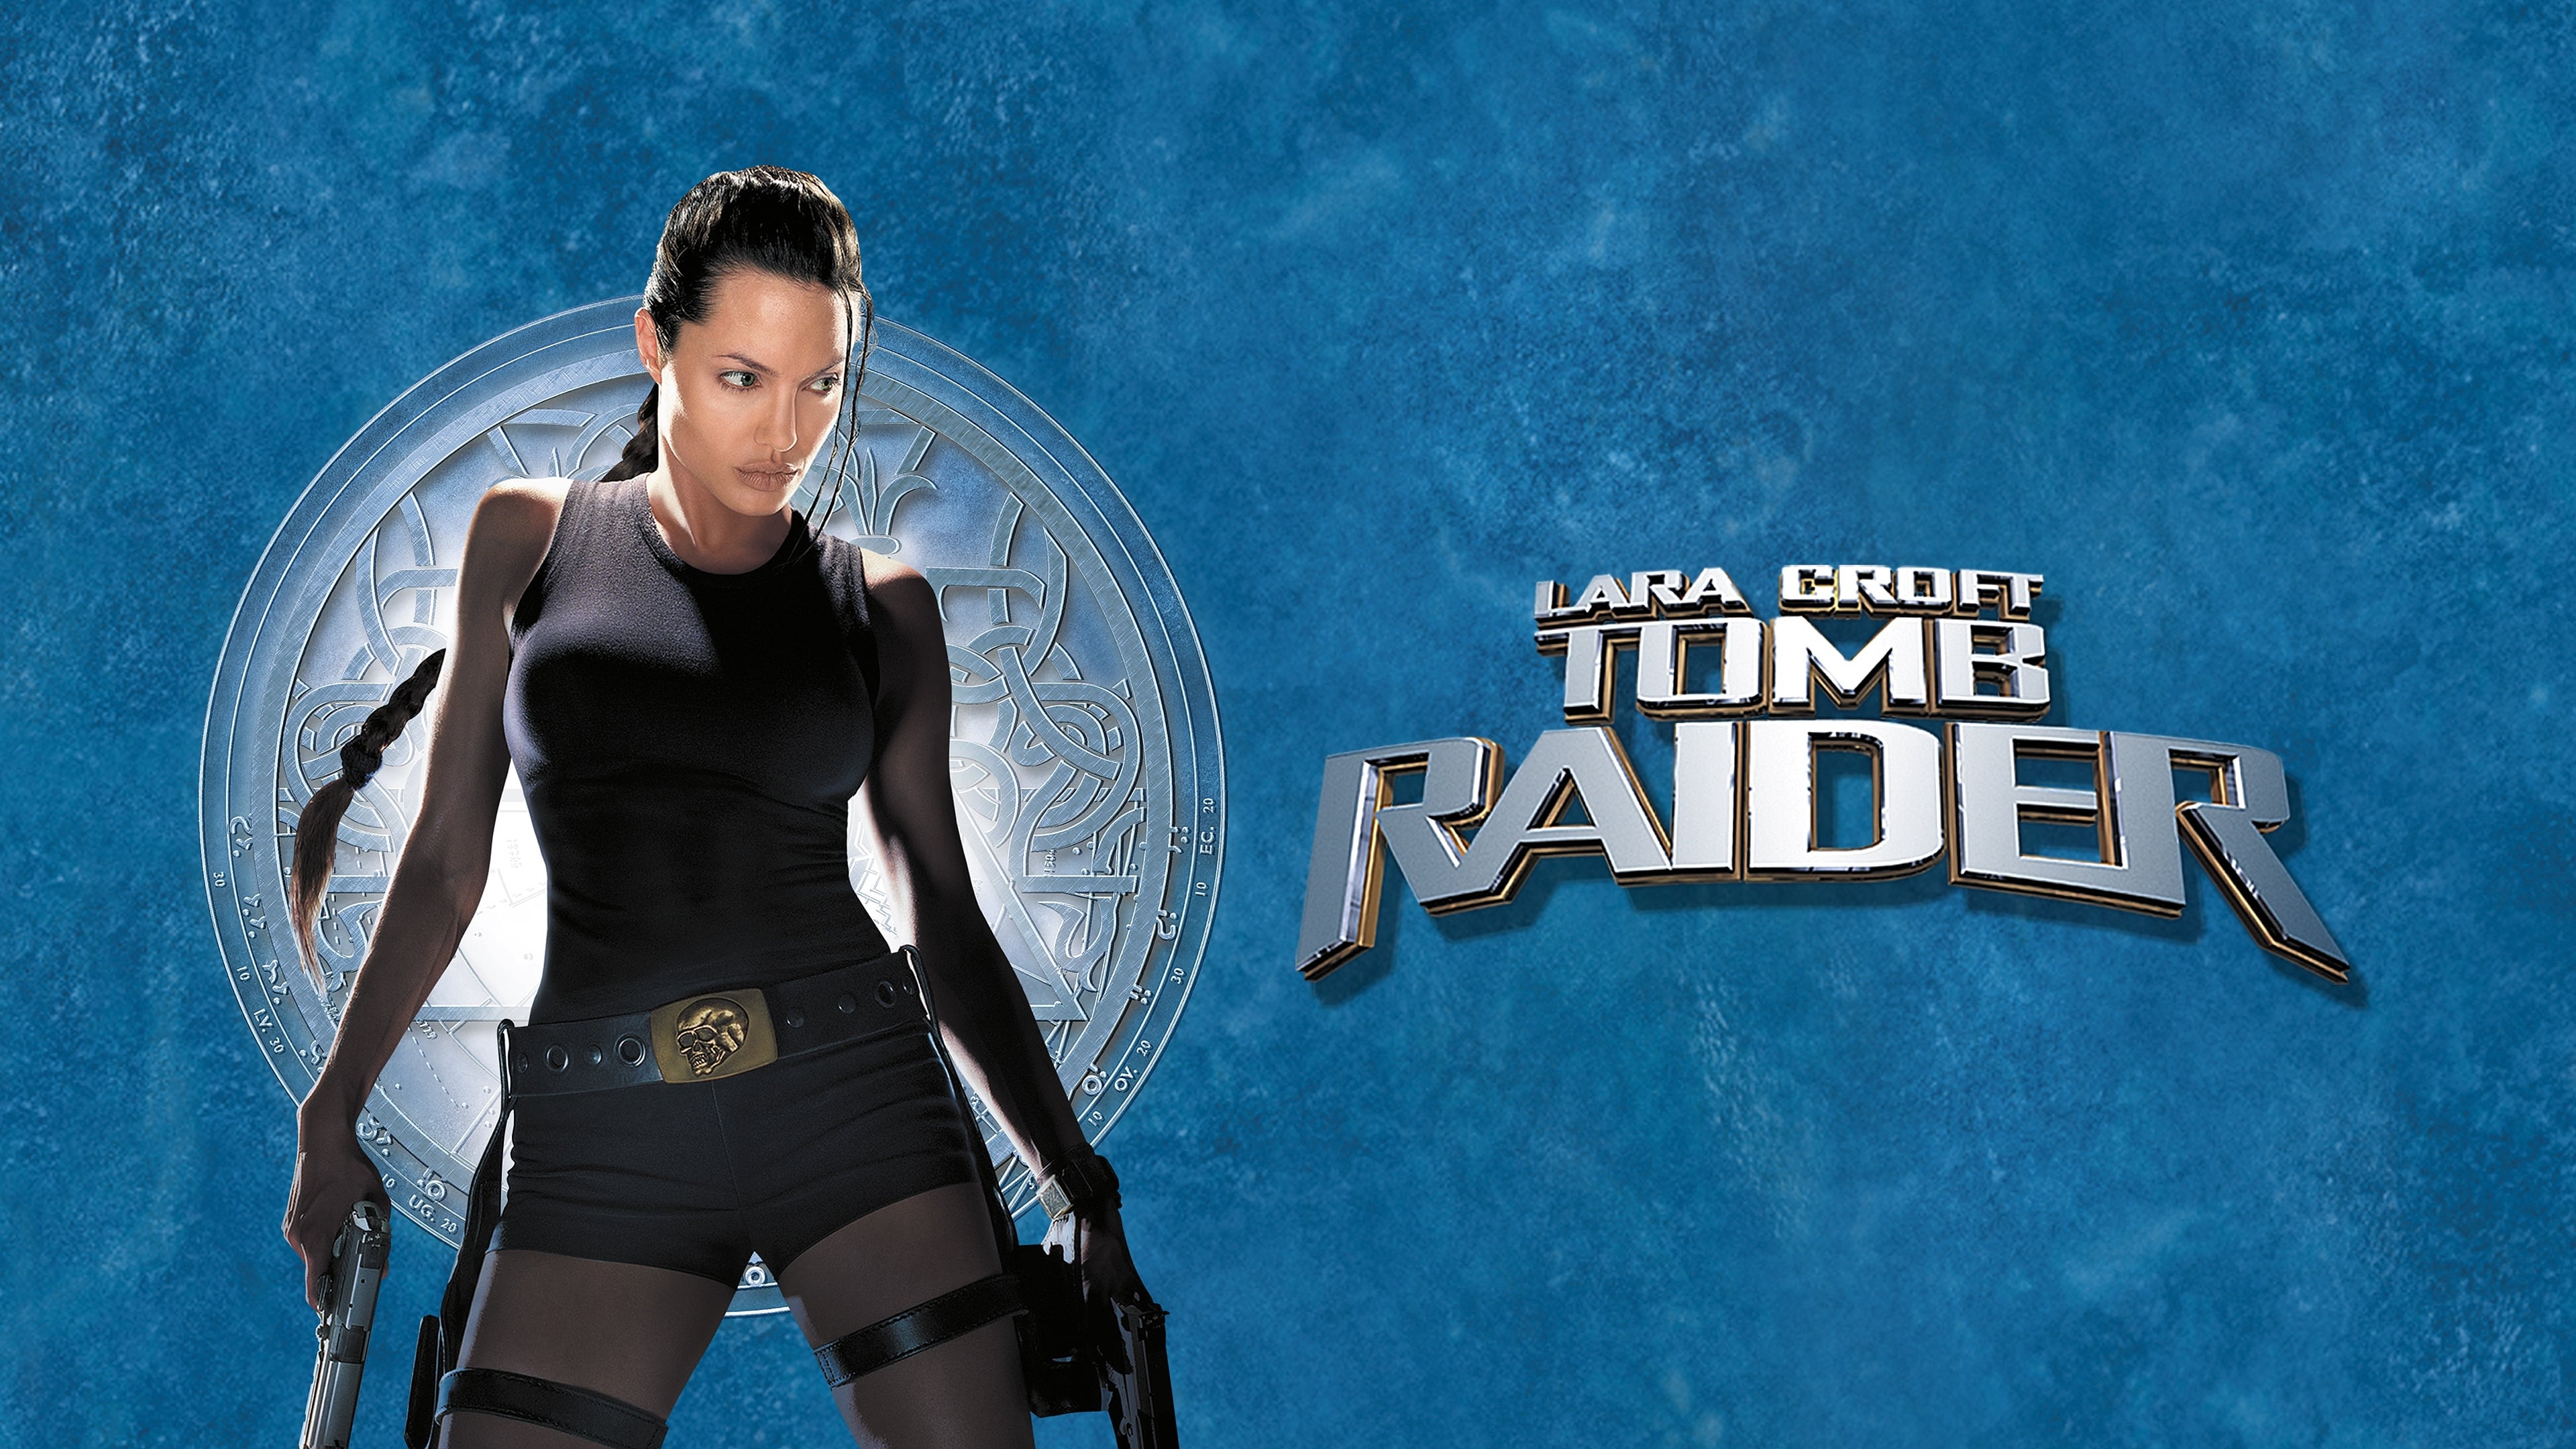 2001-06-15 - Friday - Tomb Raider, Lara Croft, Angelina Jolie AkQ4hVokkPas1jwYGlv1Lp7tm7t.jpg